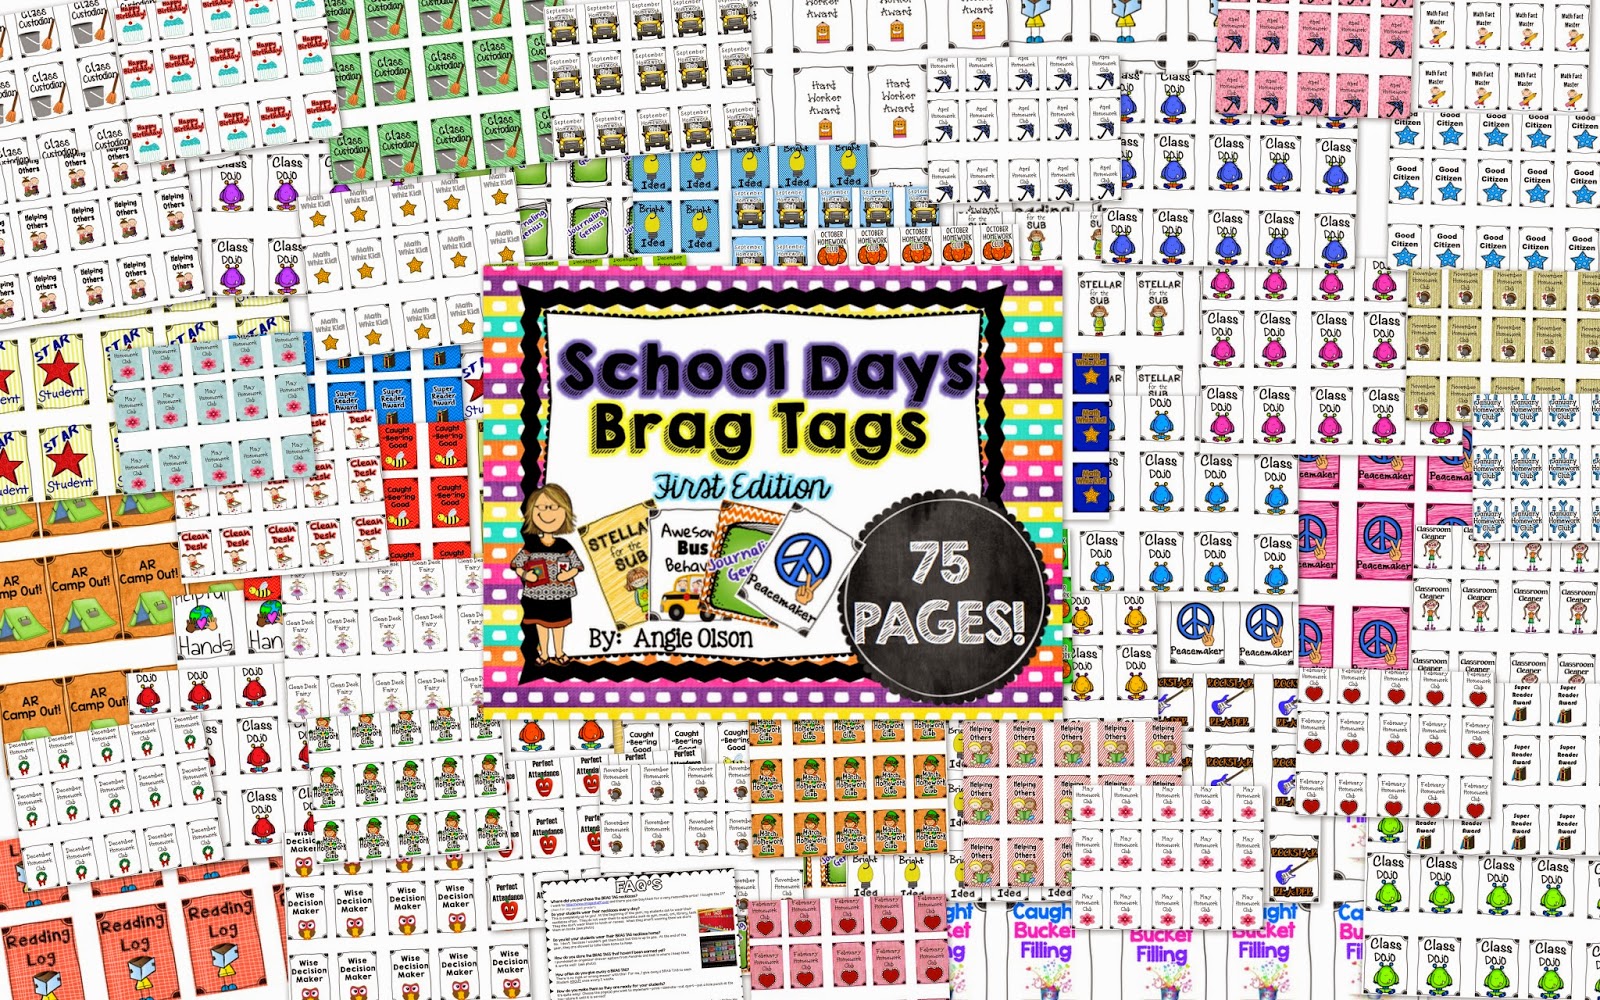 http://www.teacherspayteachers.com/Product/School-Days-BRAG-TAGS-First-Edition-851525